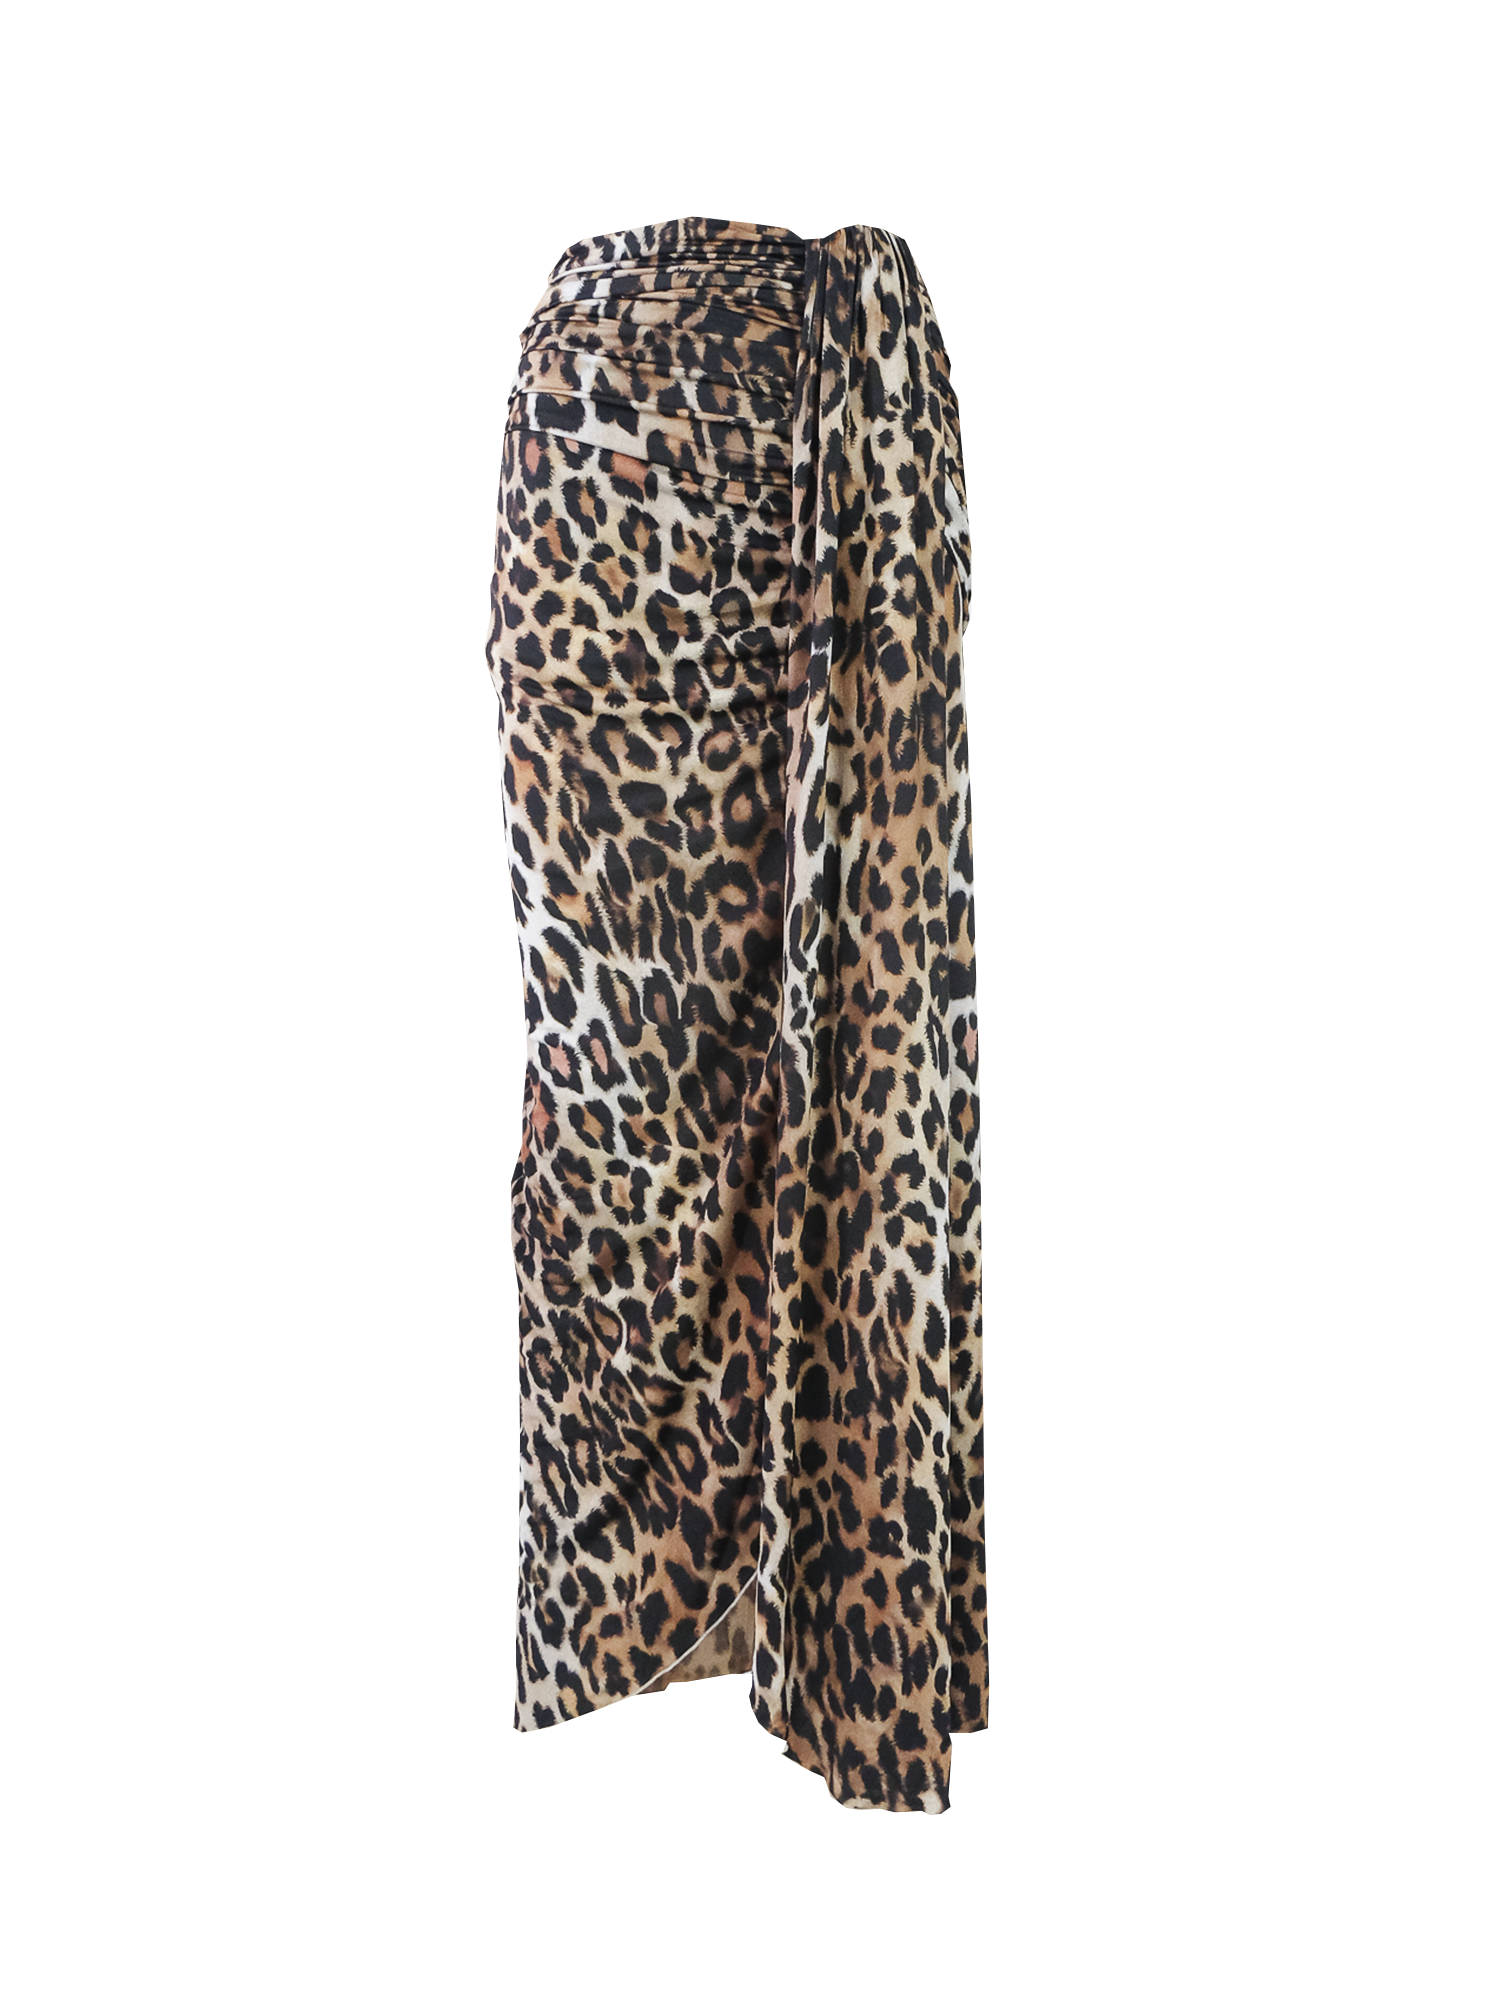 AMANDA - long skirt with slit in print animalier lycra